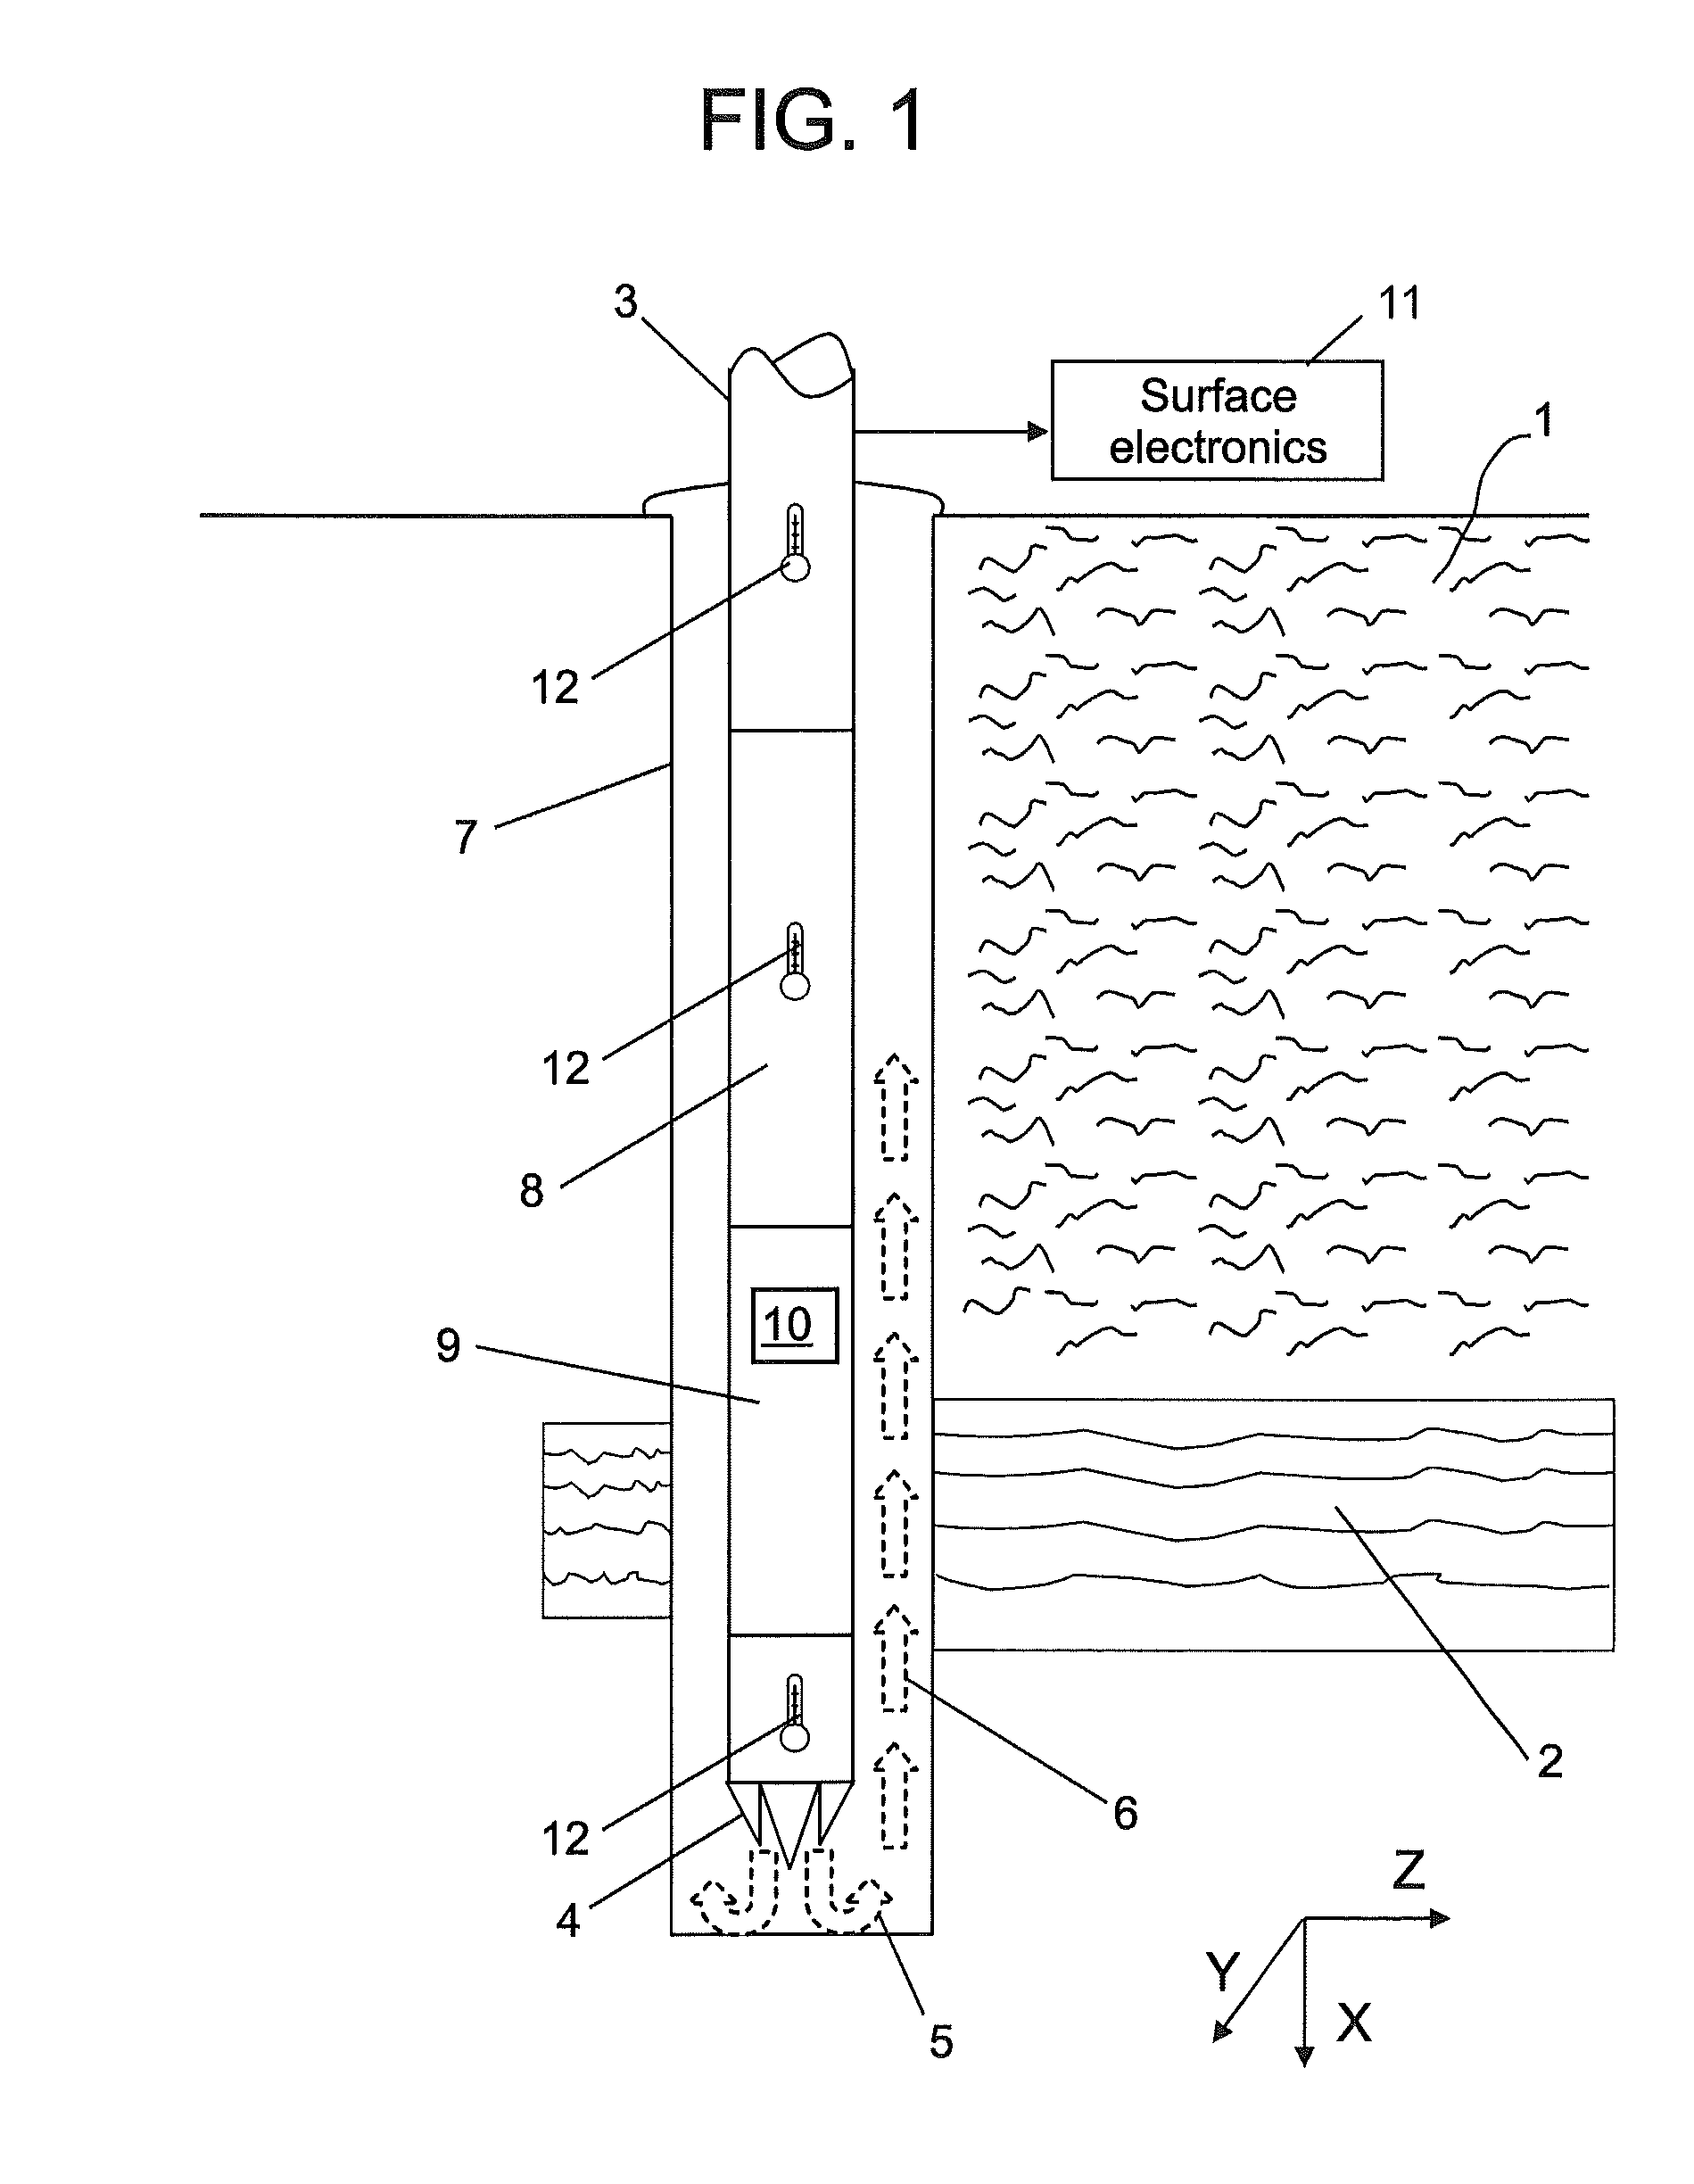 Distributed measurement of mud temperature